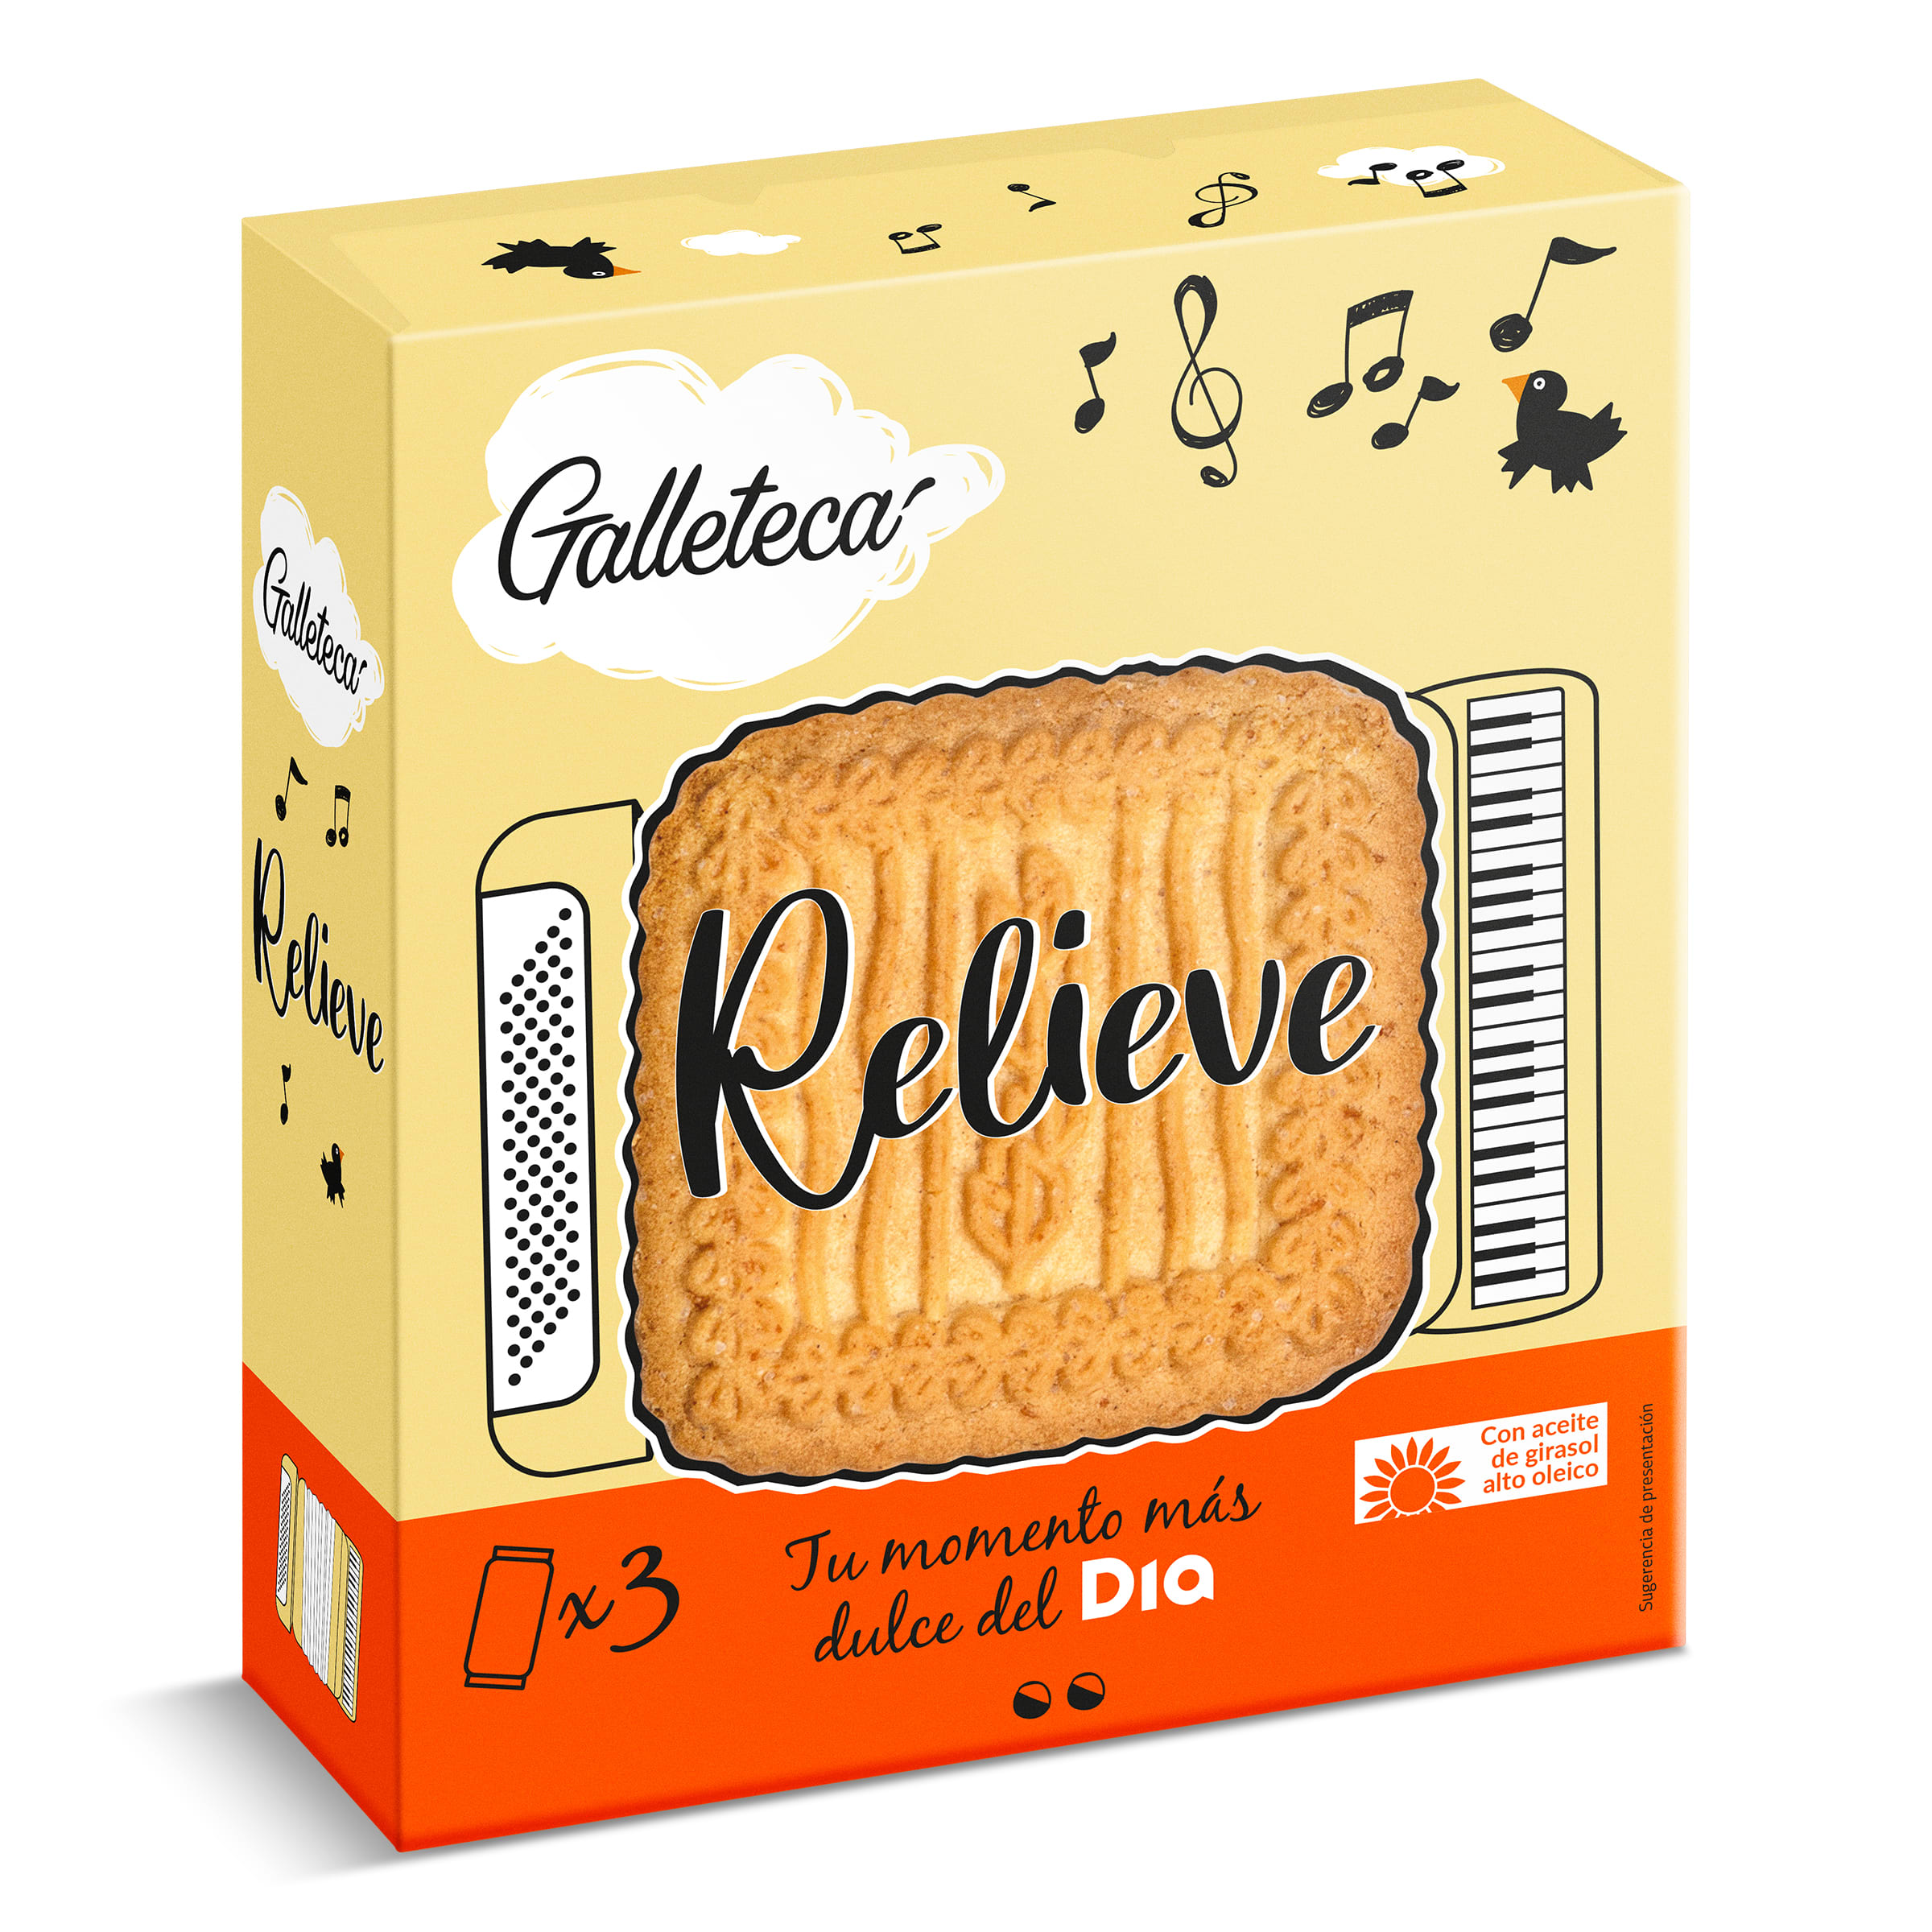 Galletas relieve Galleteca caja 735 g - Supermercados DIA